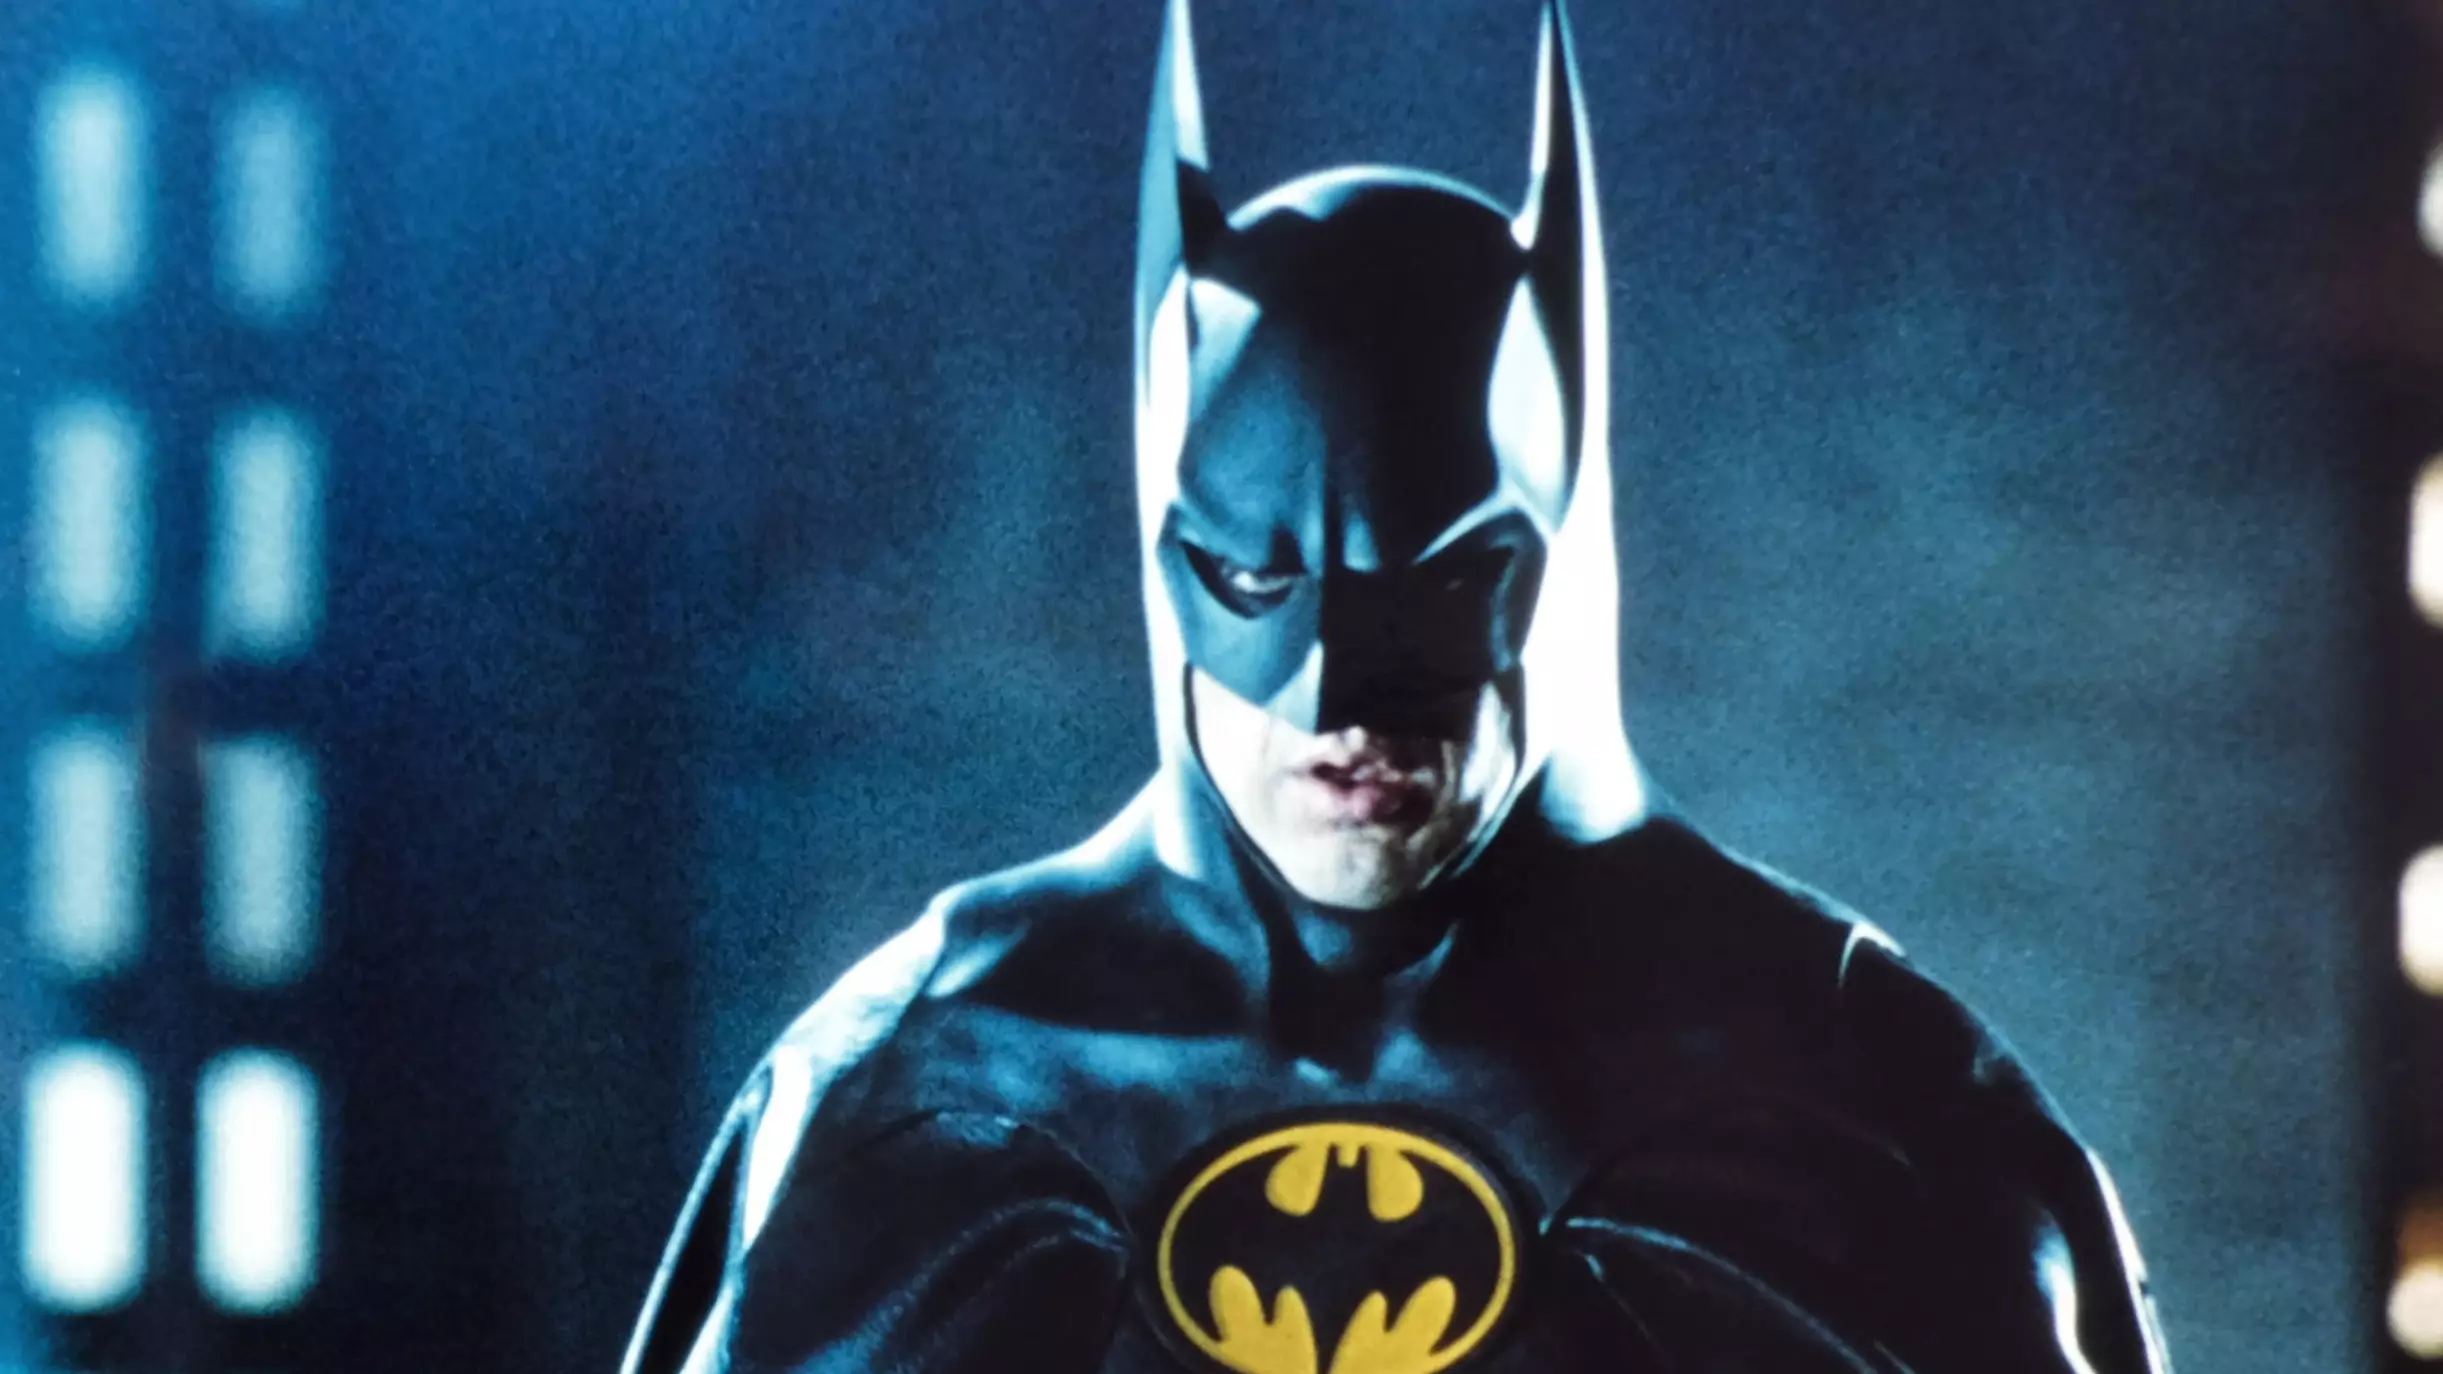 Michael Keaton And Ben Affleck To Return As Batman In New Film